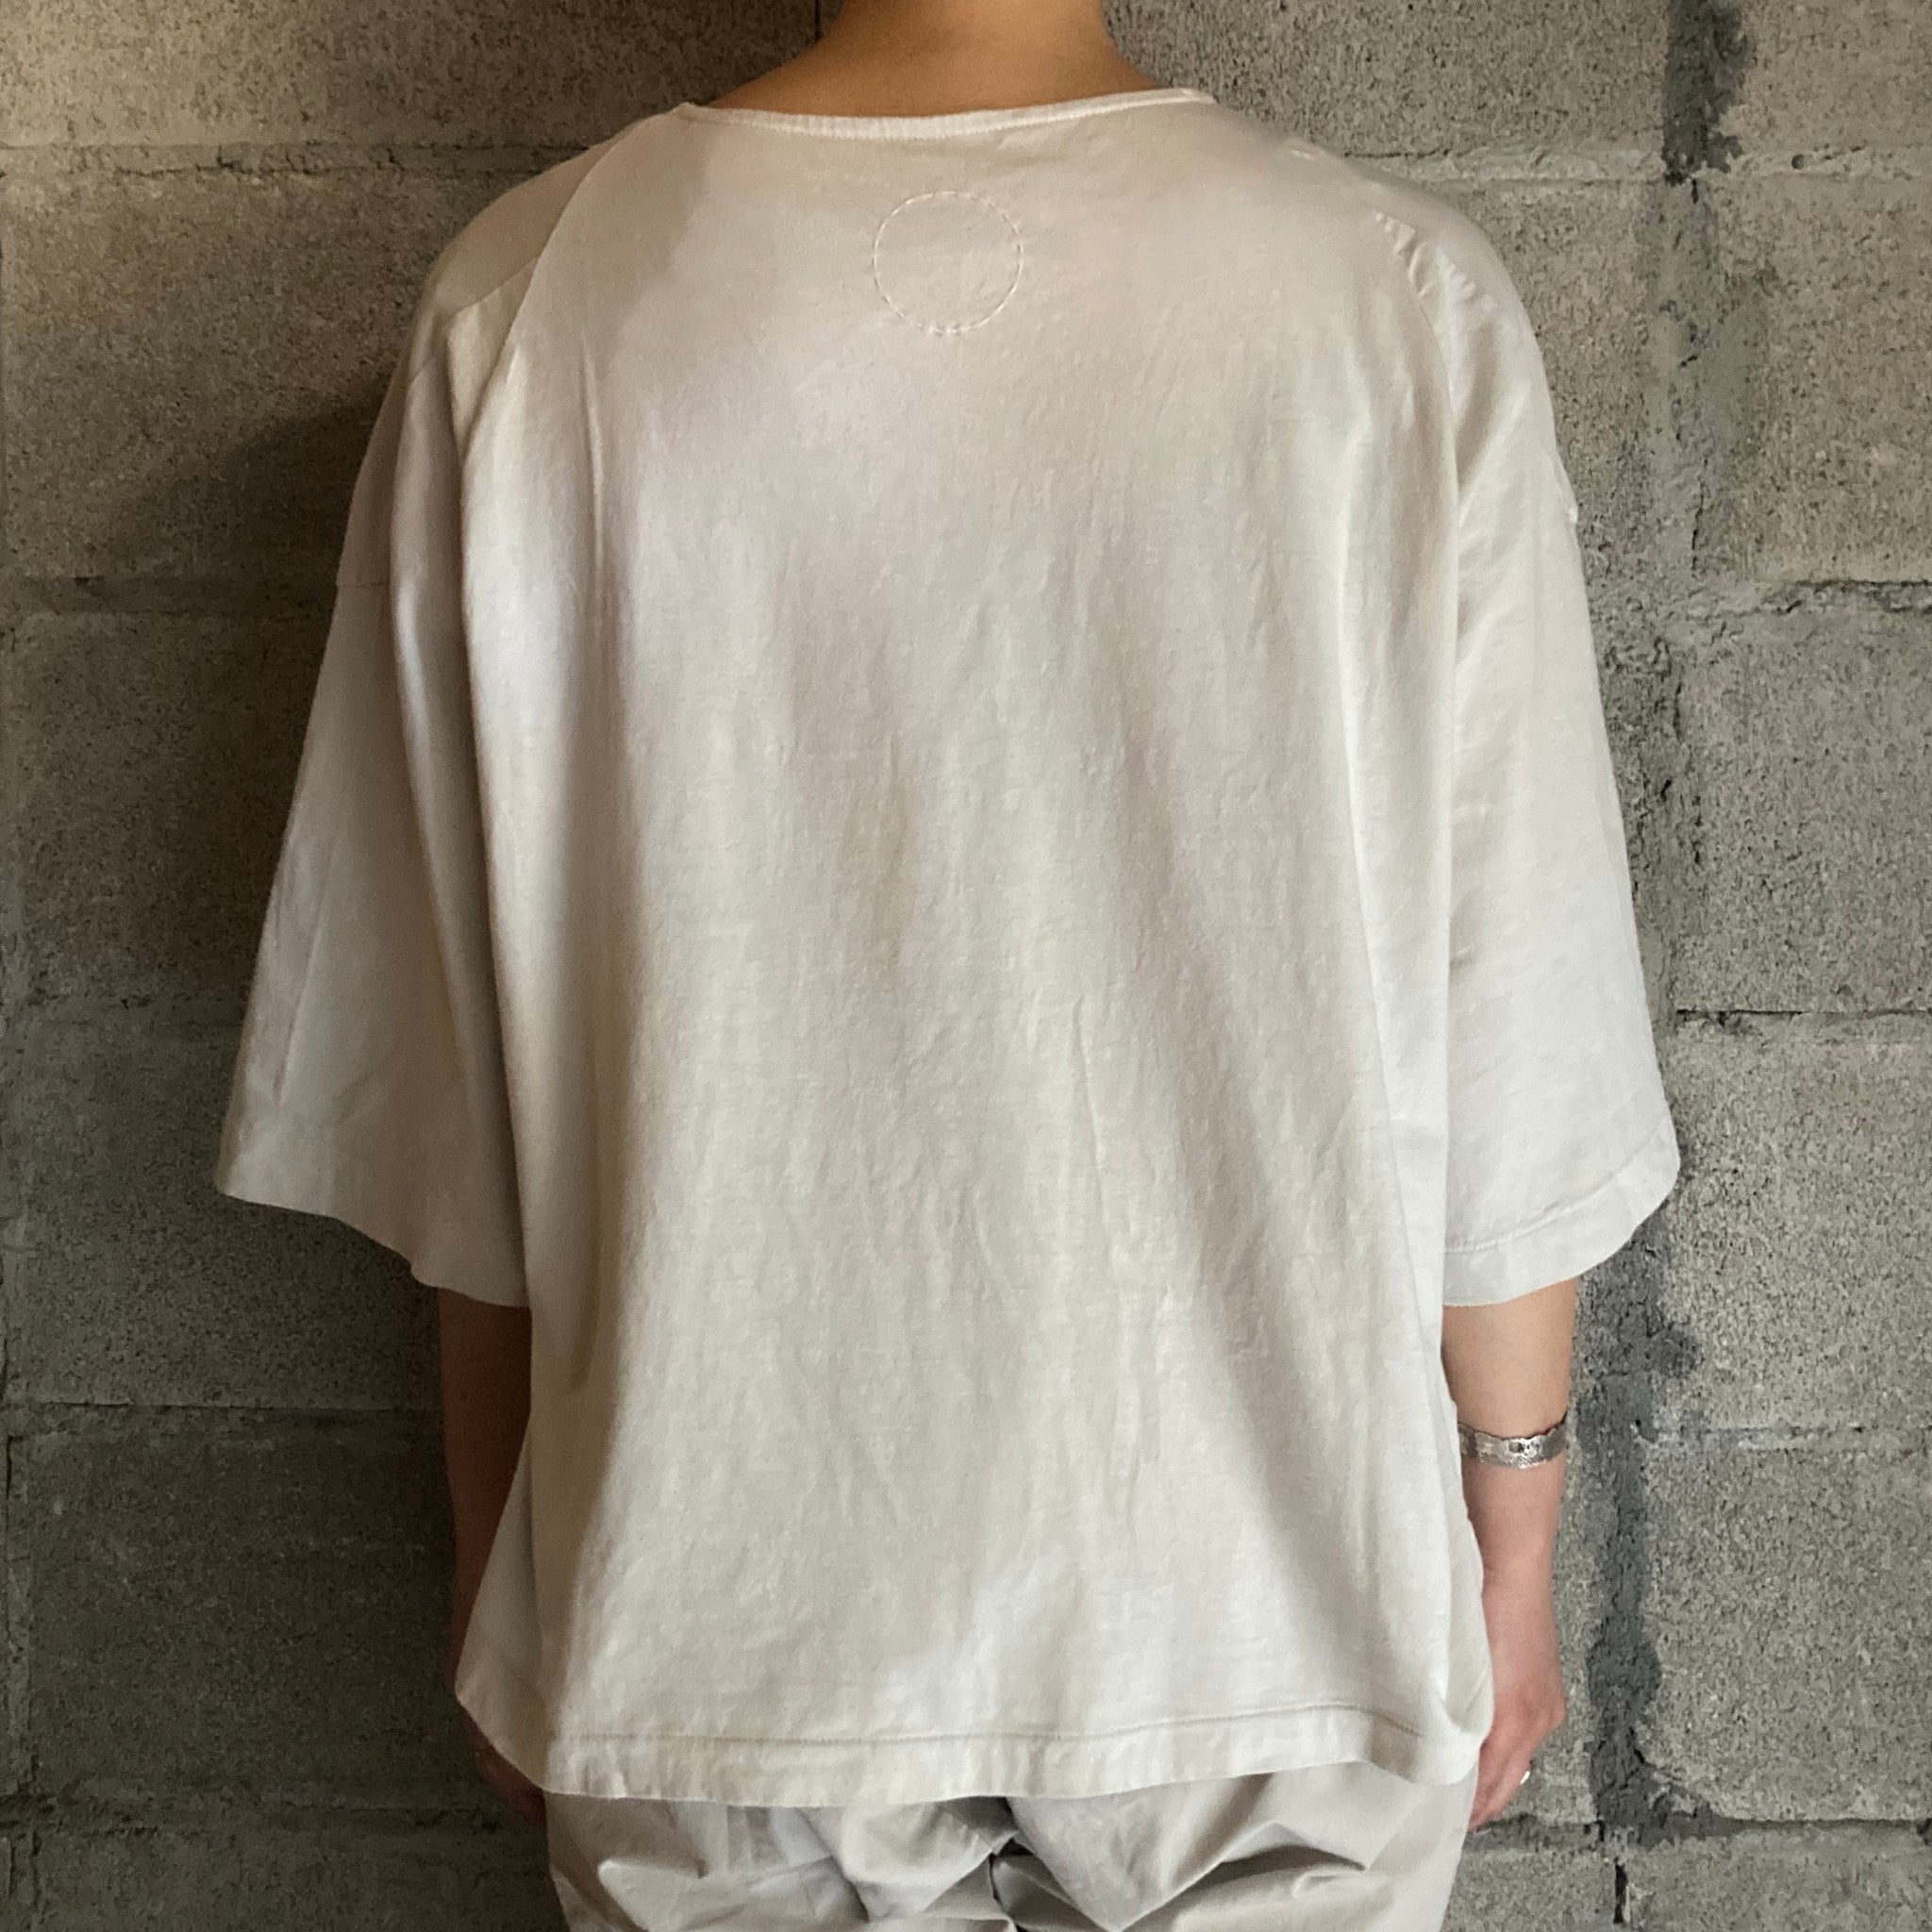 COSMIC WONDER｜19CW02059｜Tangis cotton t-shirt collection｜Silver quartz